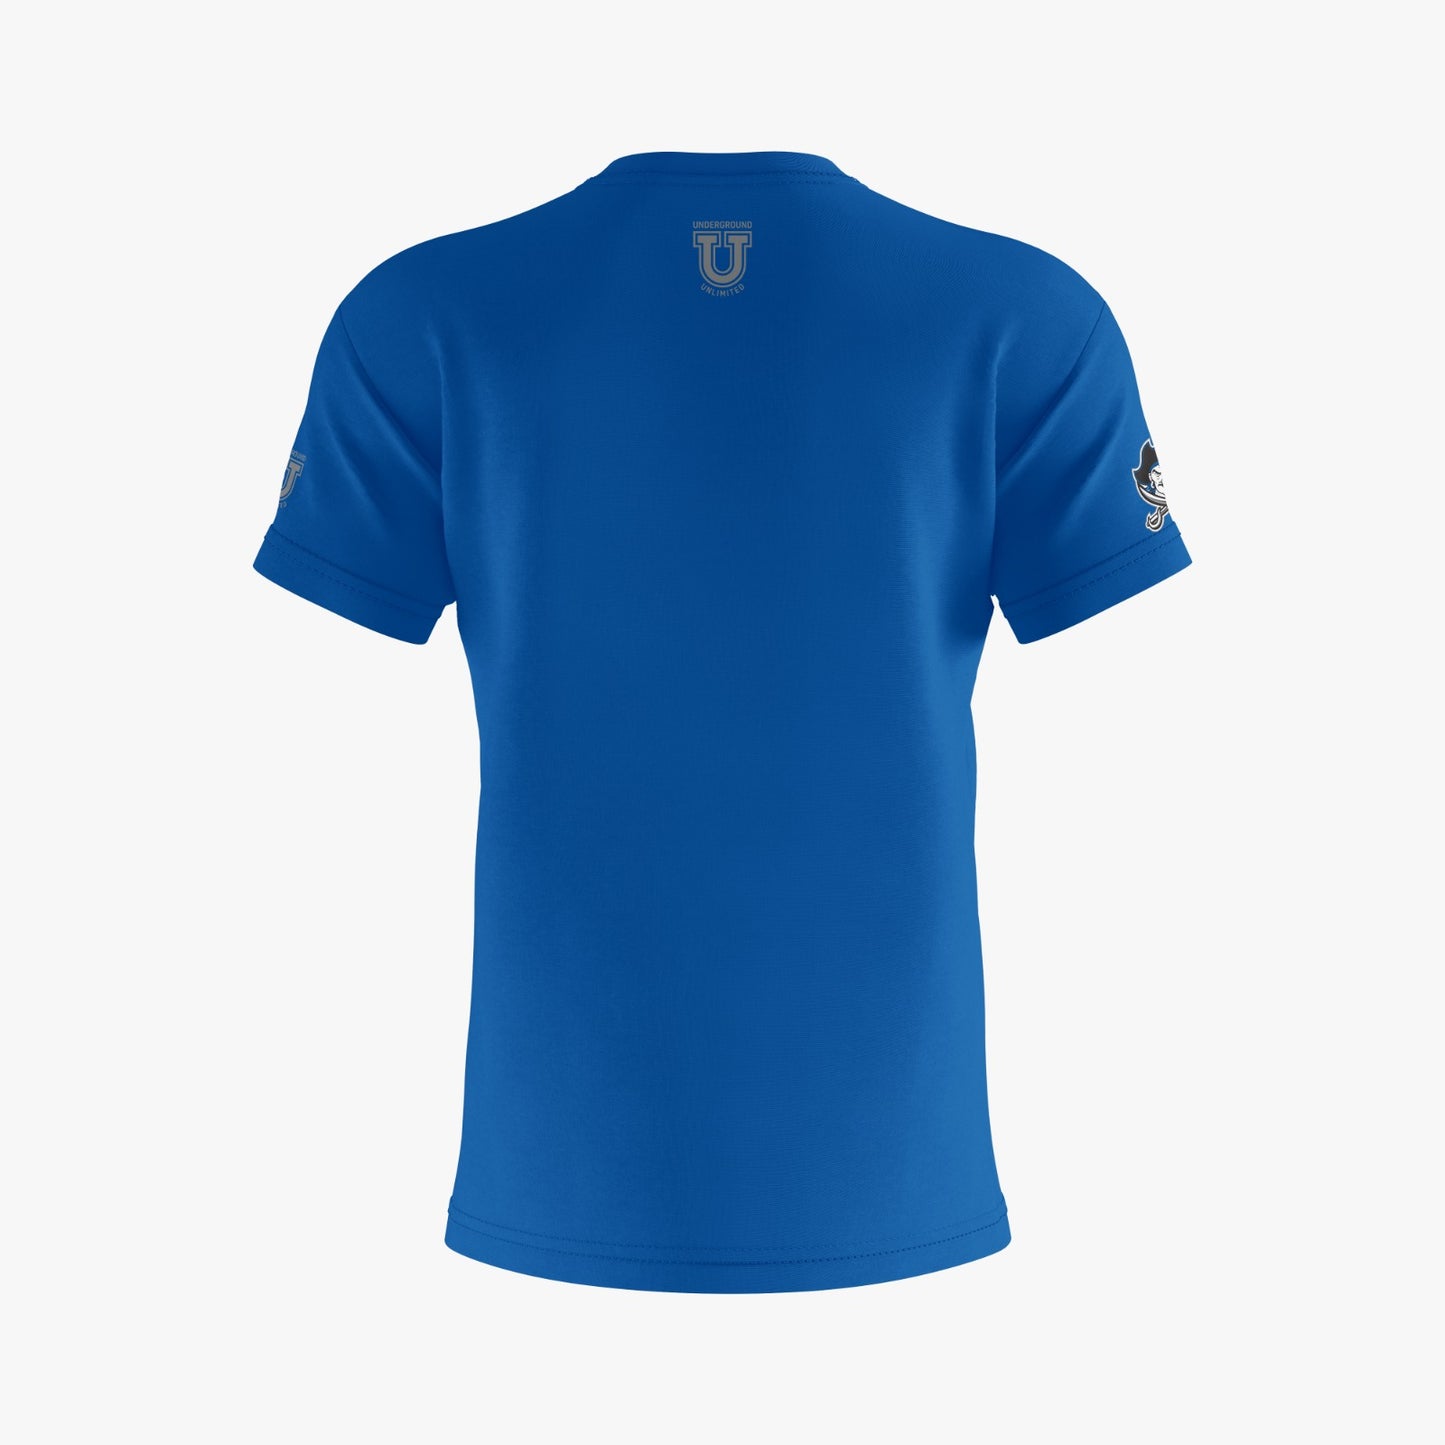 Buccaneers Cheerleading Dri Tech T-Shirt ~ Solid Blue